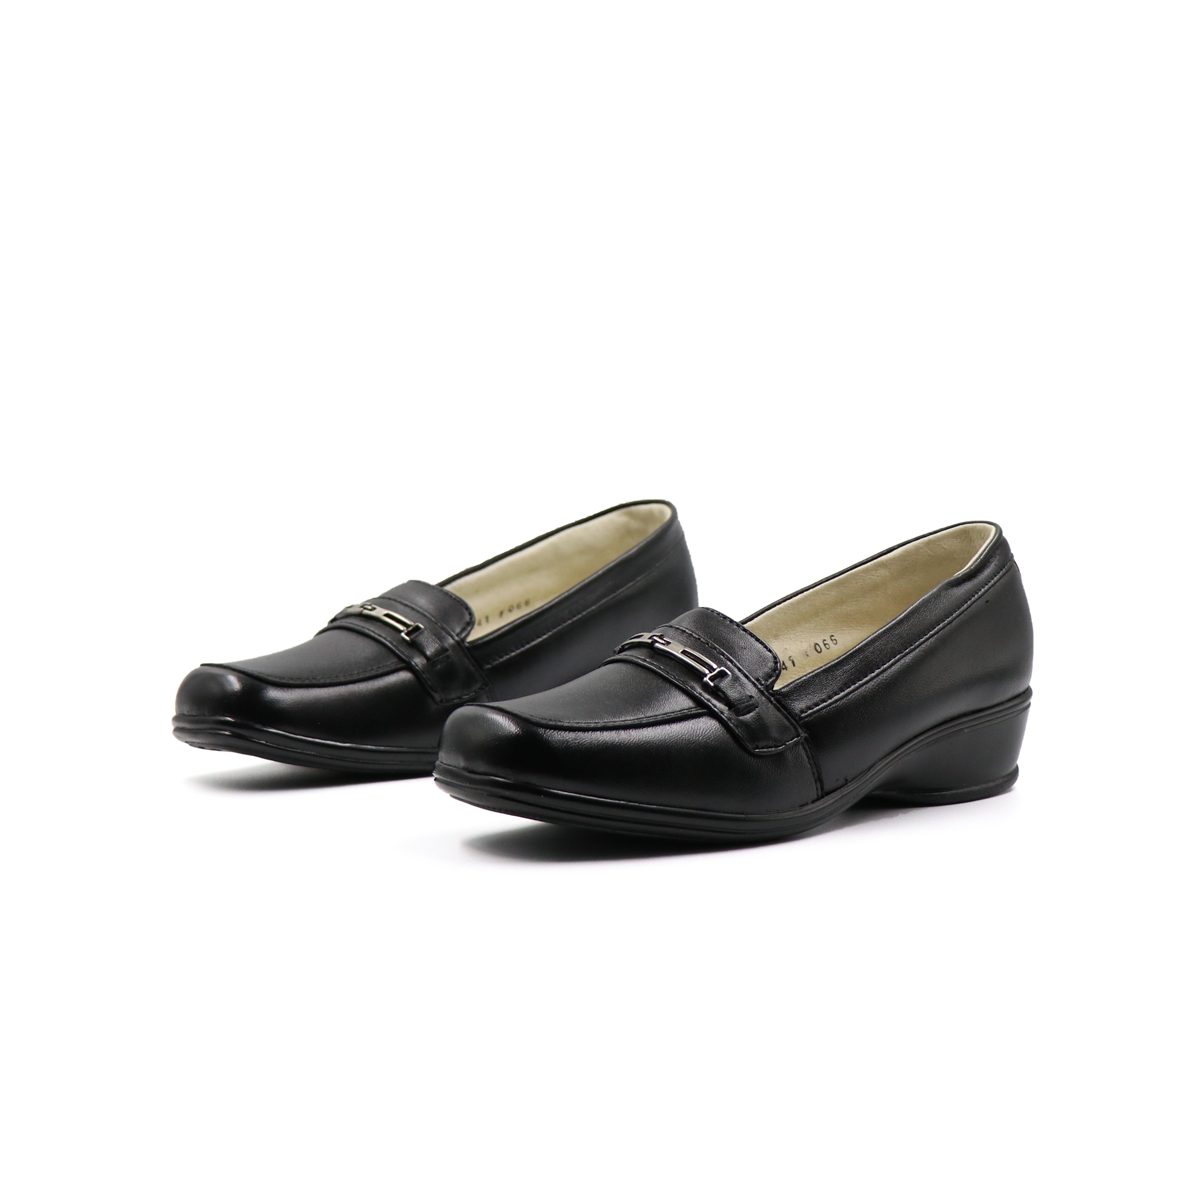 Zapato Confort Con Hebilla Negro-41